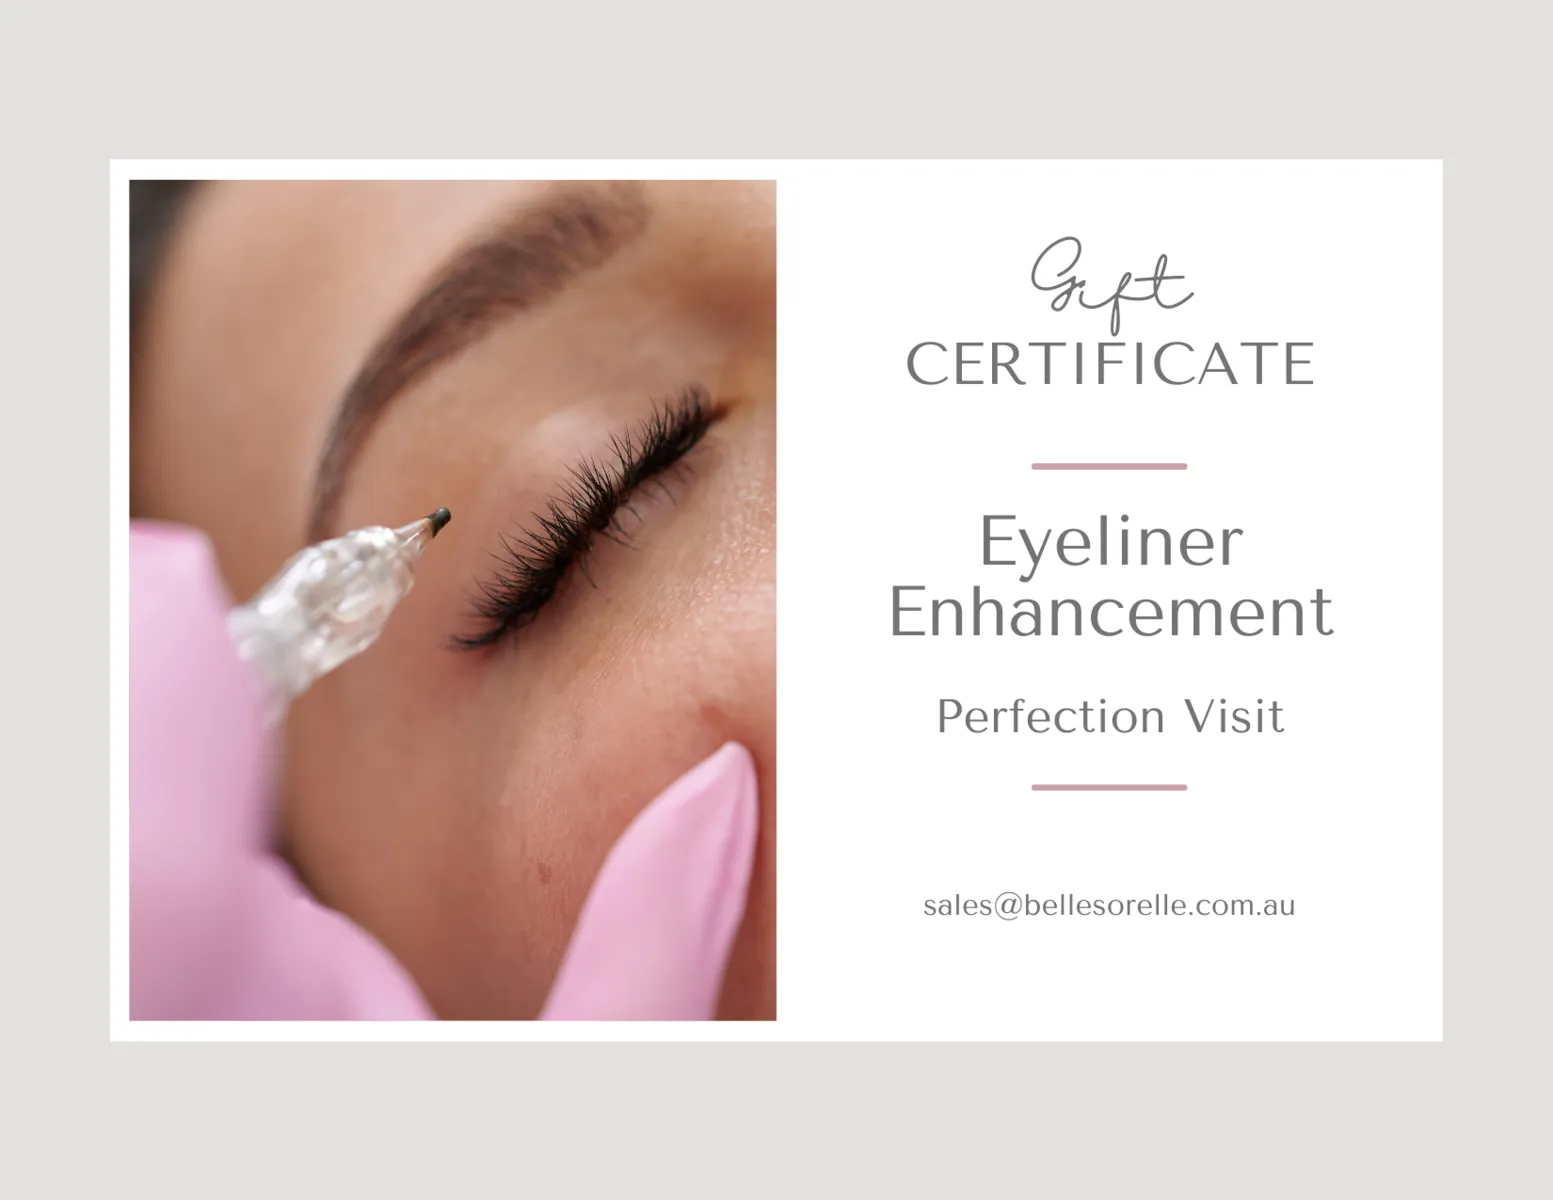 Eyeliner Enhancement - Perfection Visit